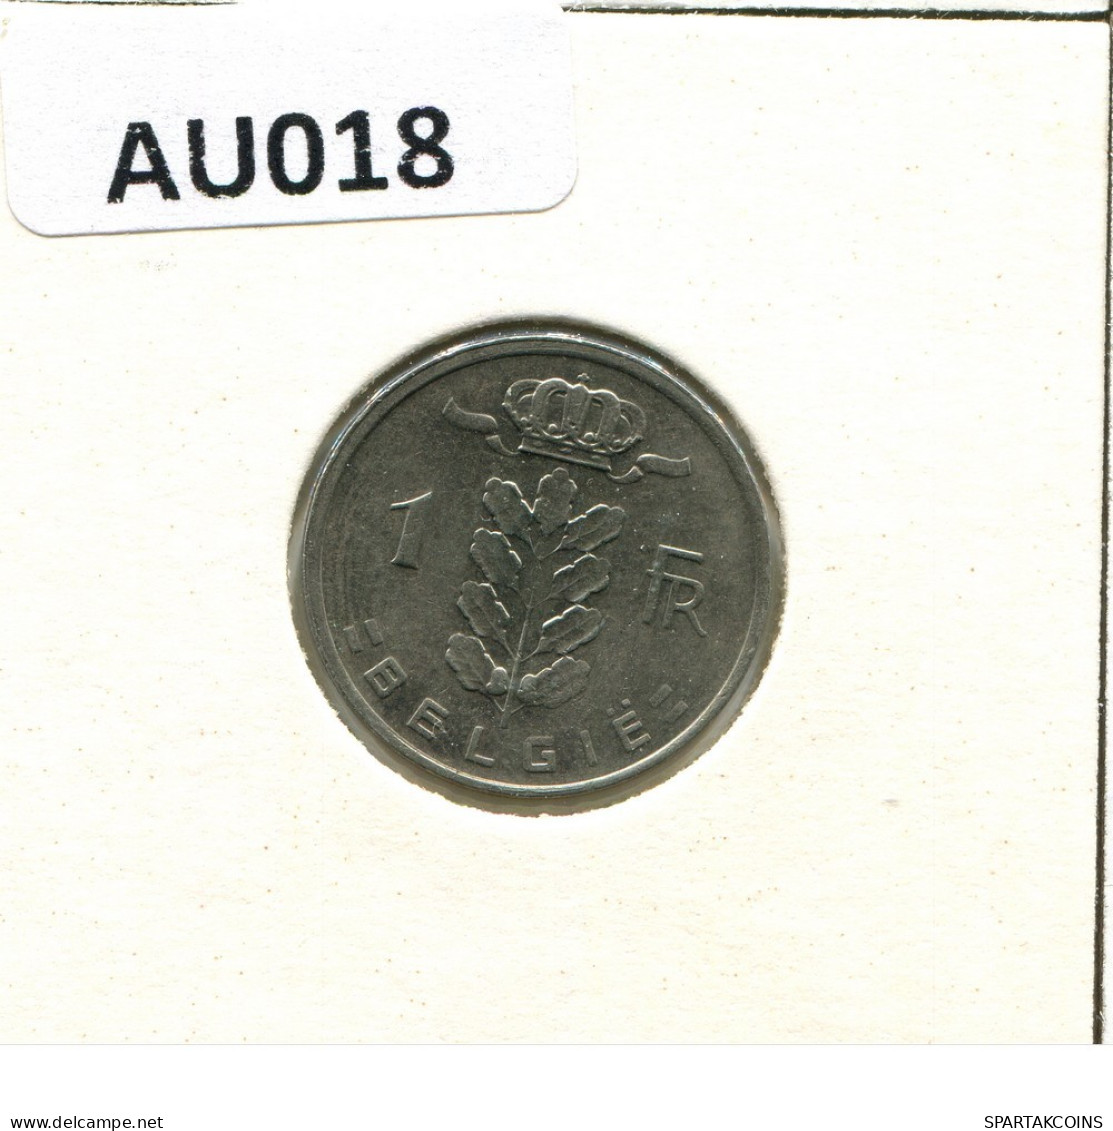 1 FRANC 1980 DUTCH Text BELGIQUE BELGIUM Pièce #AU018.F.A - 1 Franc